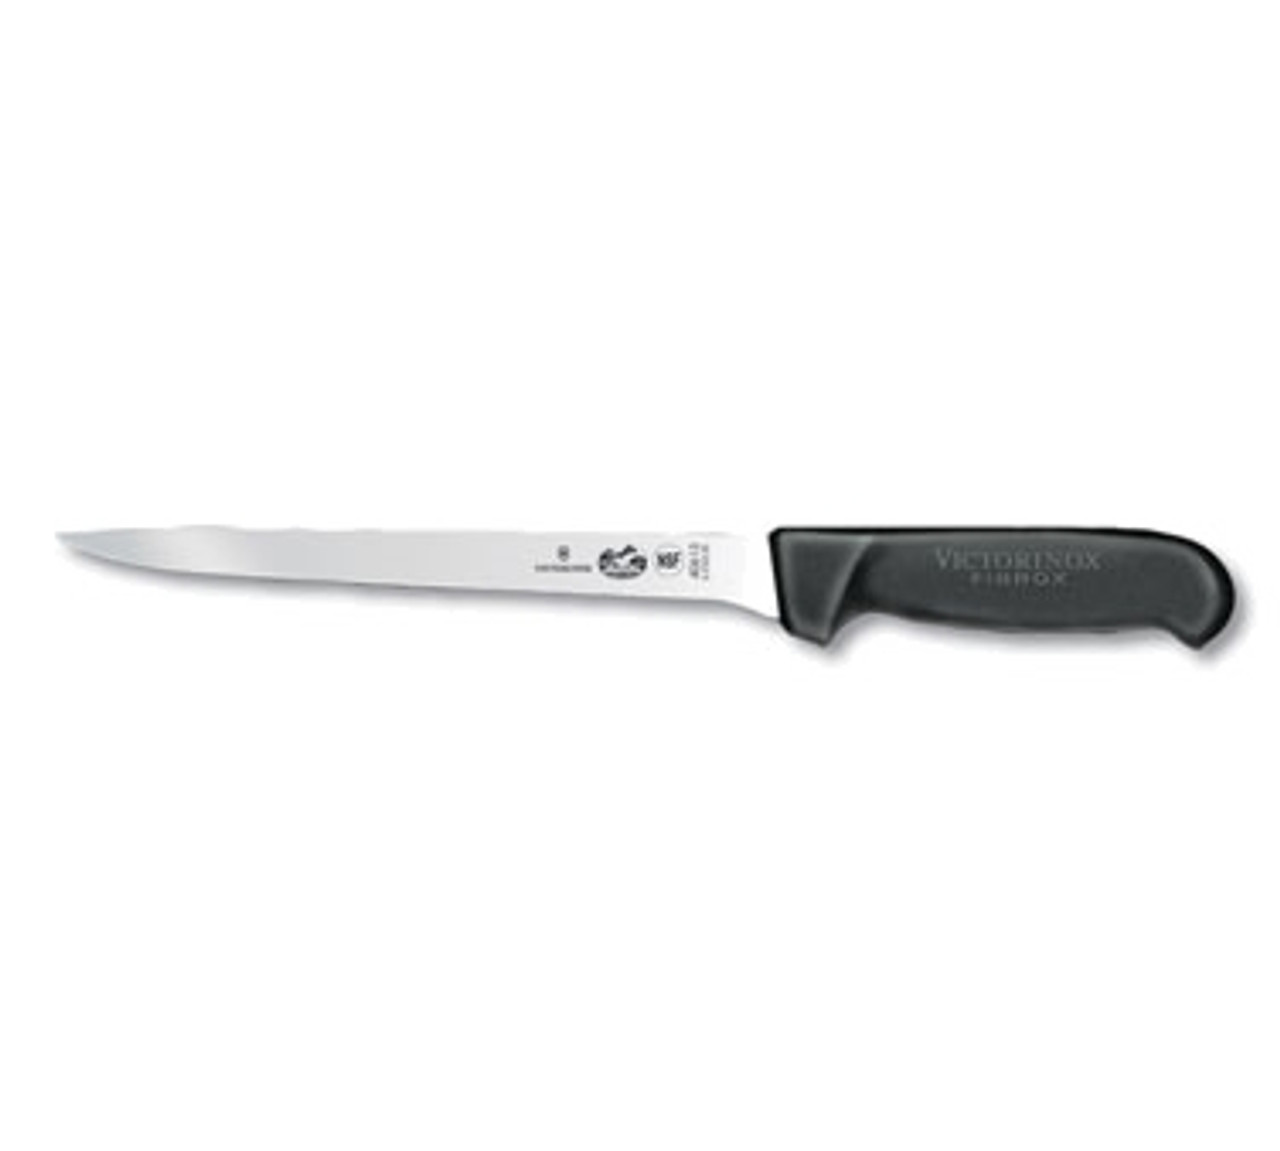 Victorinox 5.3763.20 8" Flexible Fillet / Fishing Knife - Black Fibrox